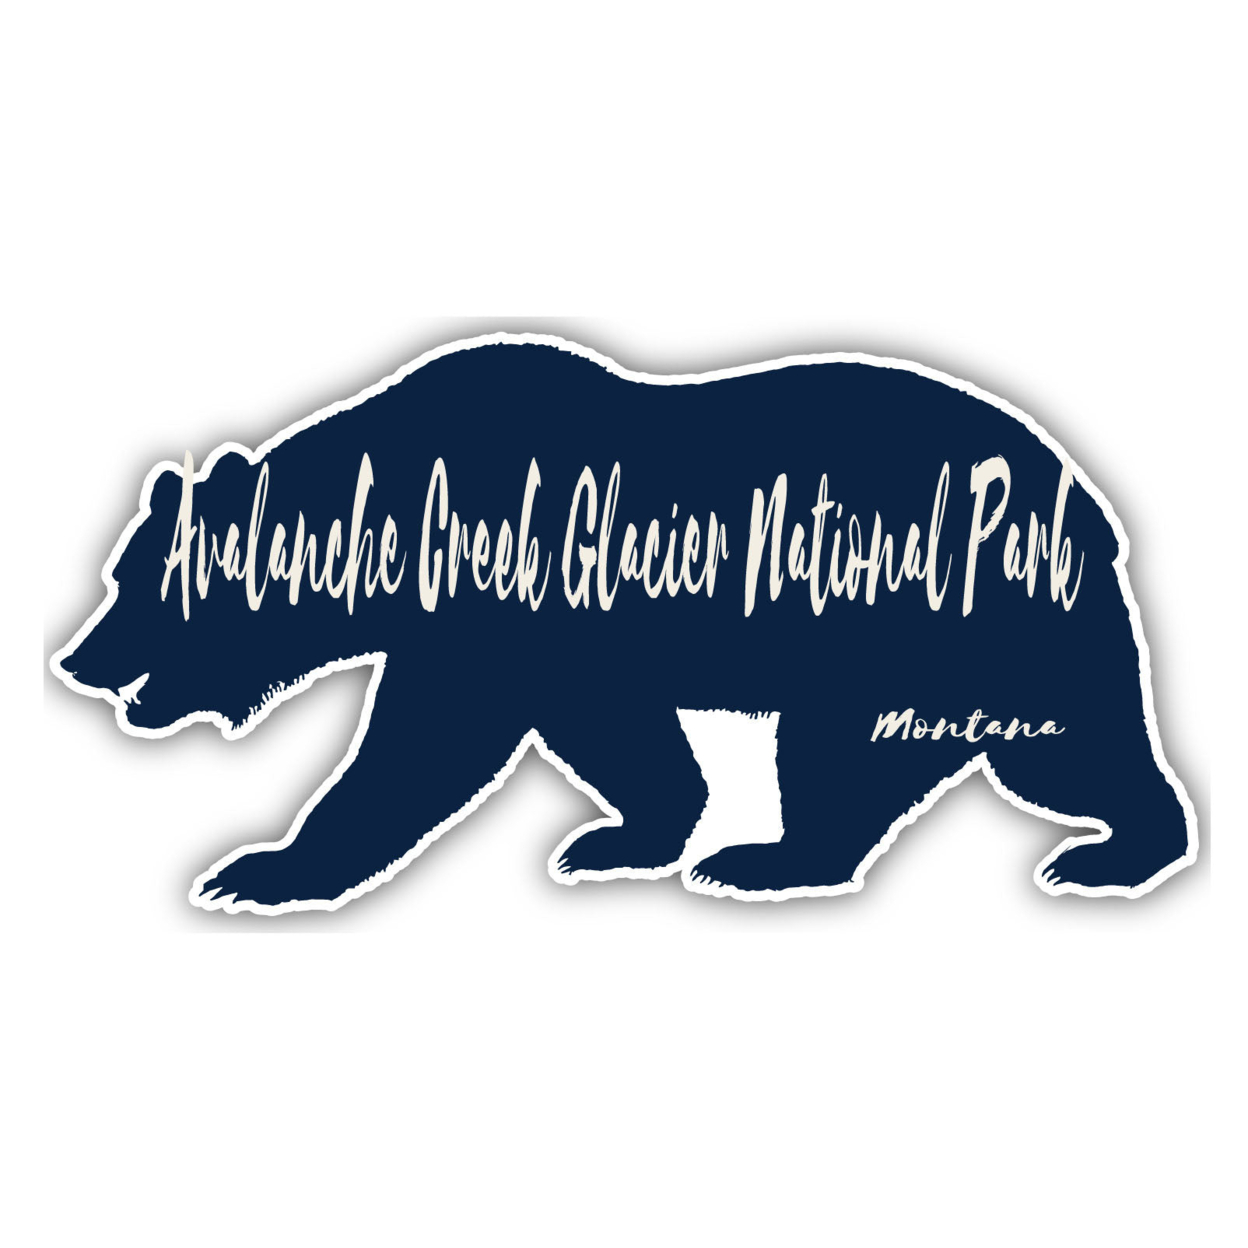 Avalanche Creek Glacier National Park Montana Souvenir Decorative Stickers (Choose Theme And Size) - 4-Pack, 4-Inch, Bear